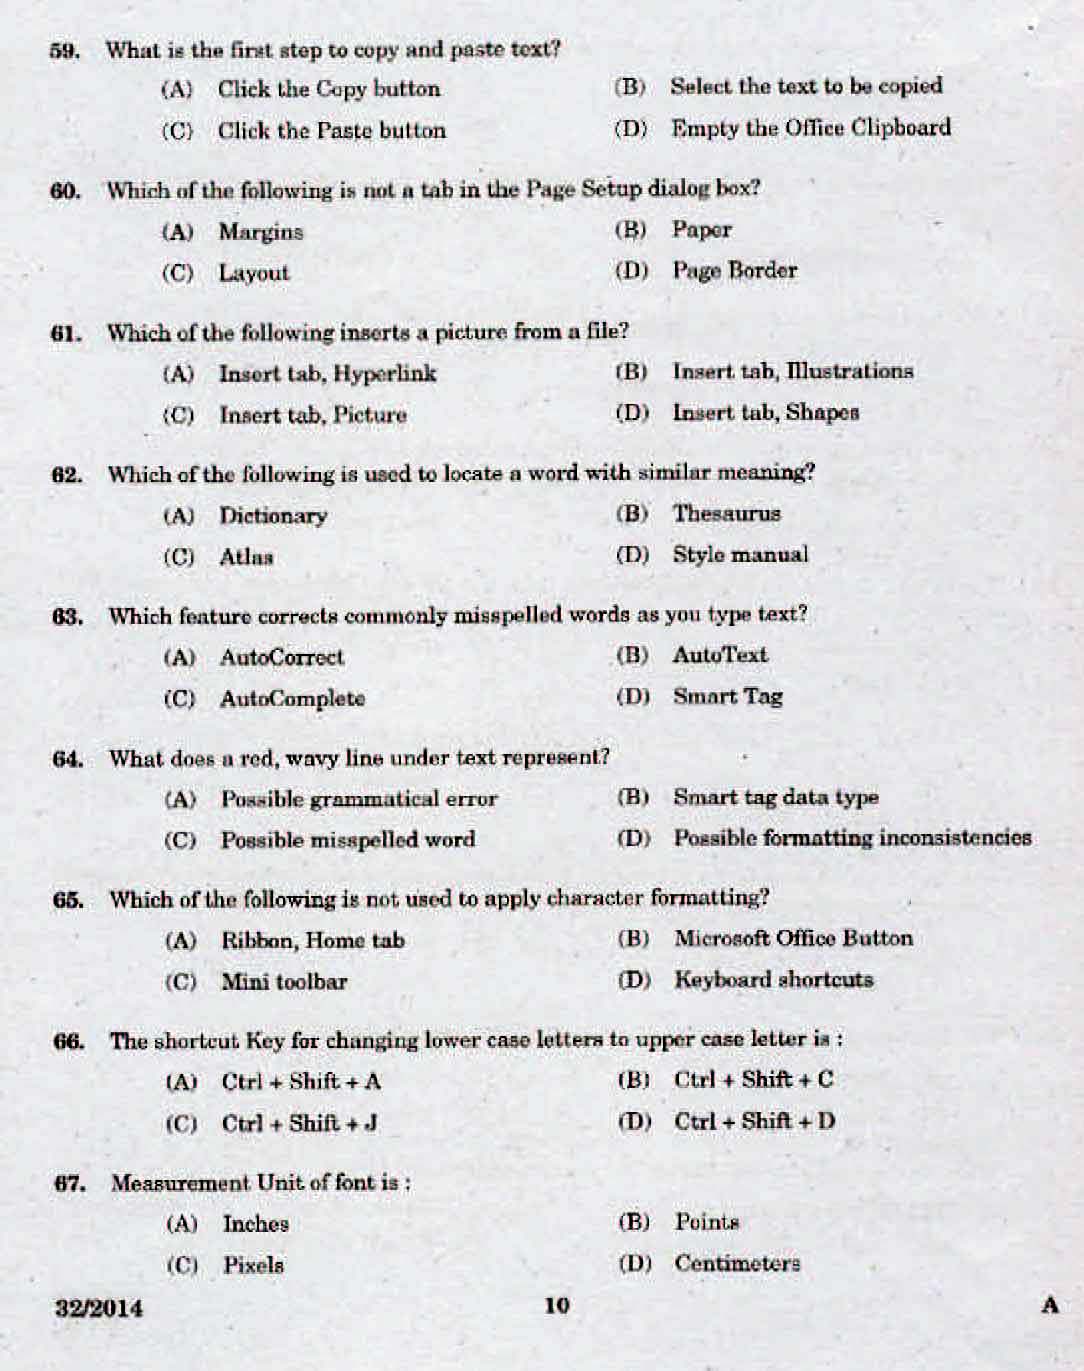 Kerala LD Typist Exam 2014 Question Paper Code 322014 8